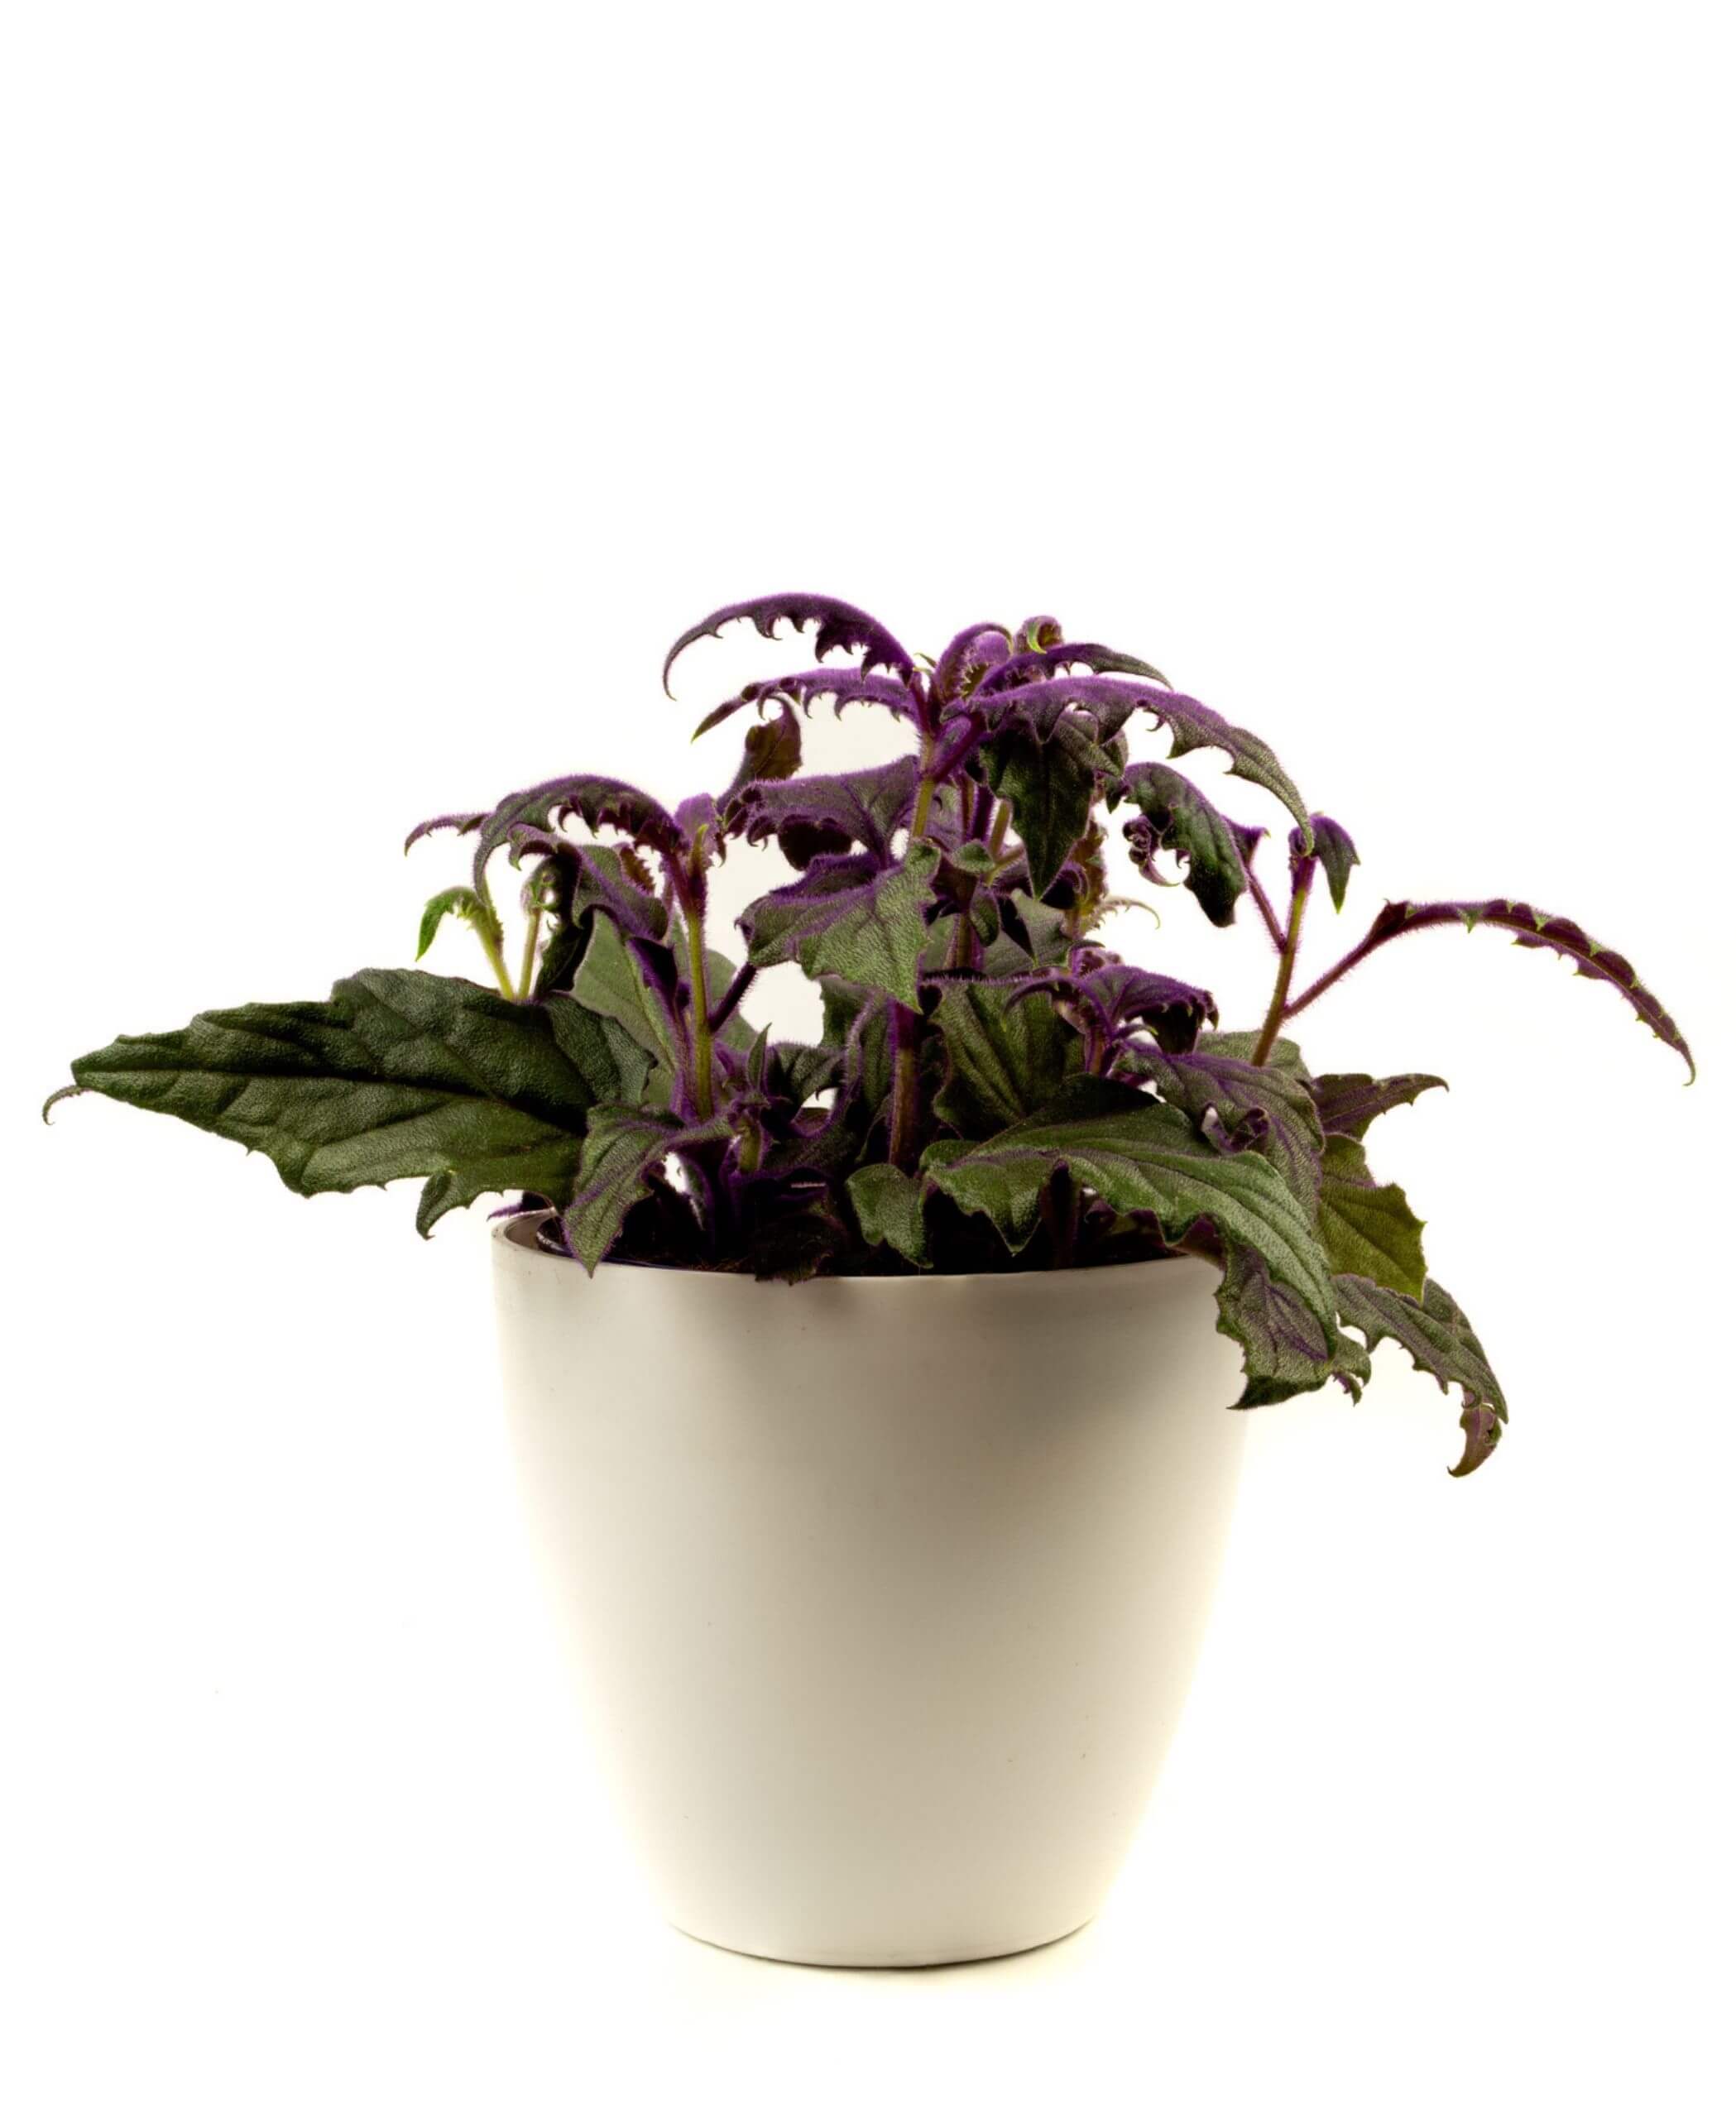 Courgette plant care: watering & more - Plantura